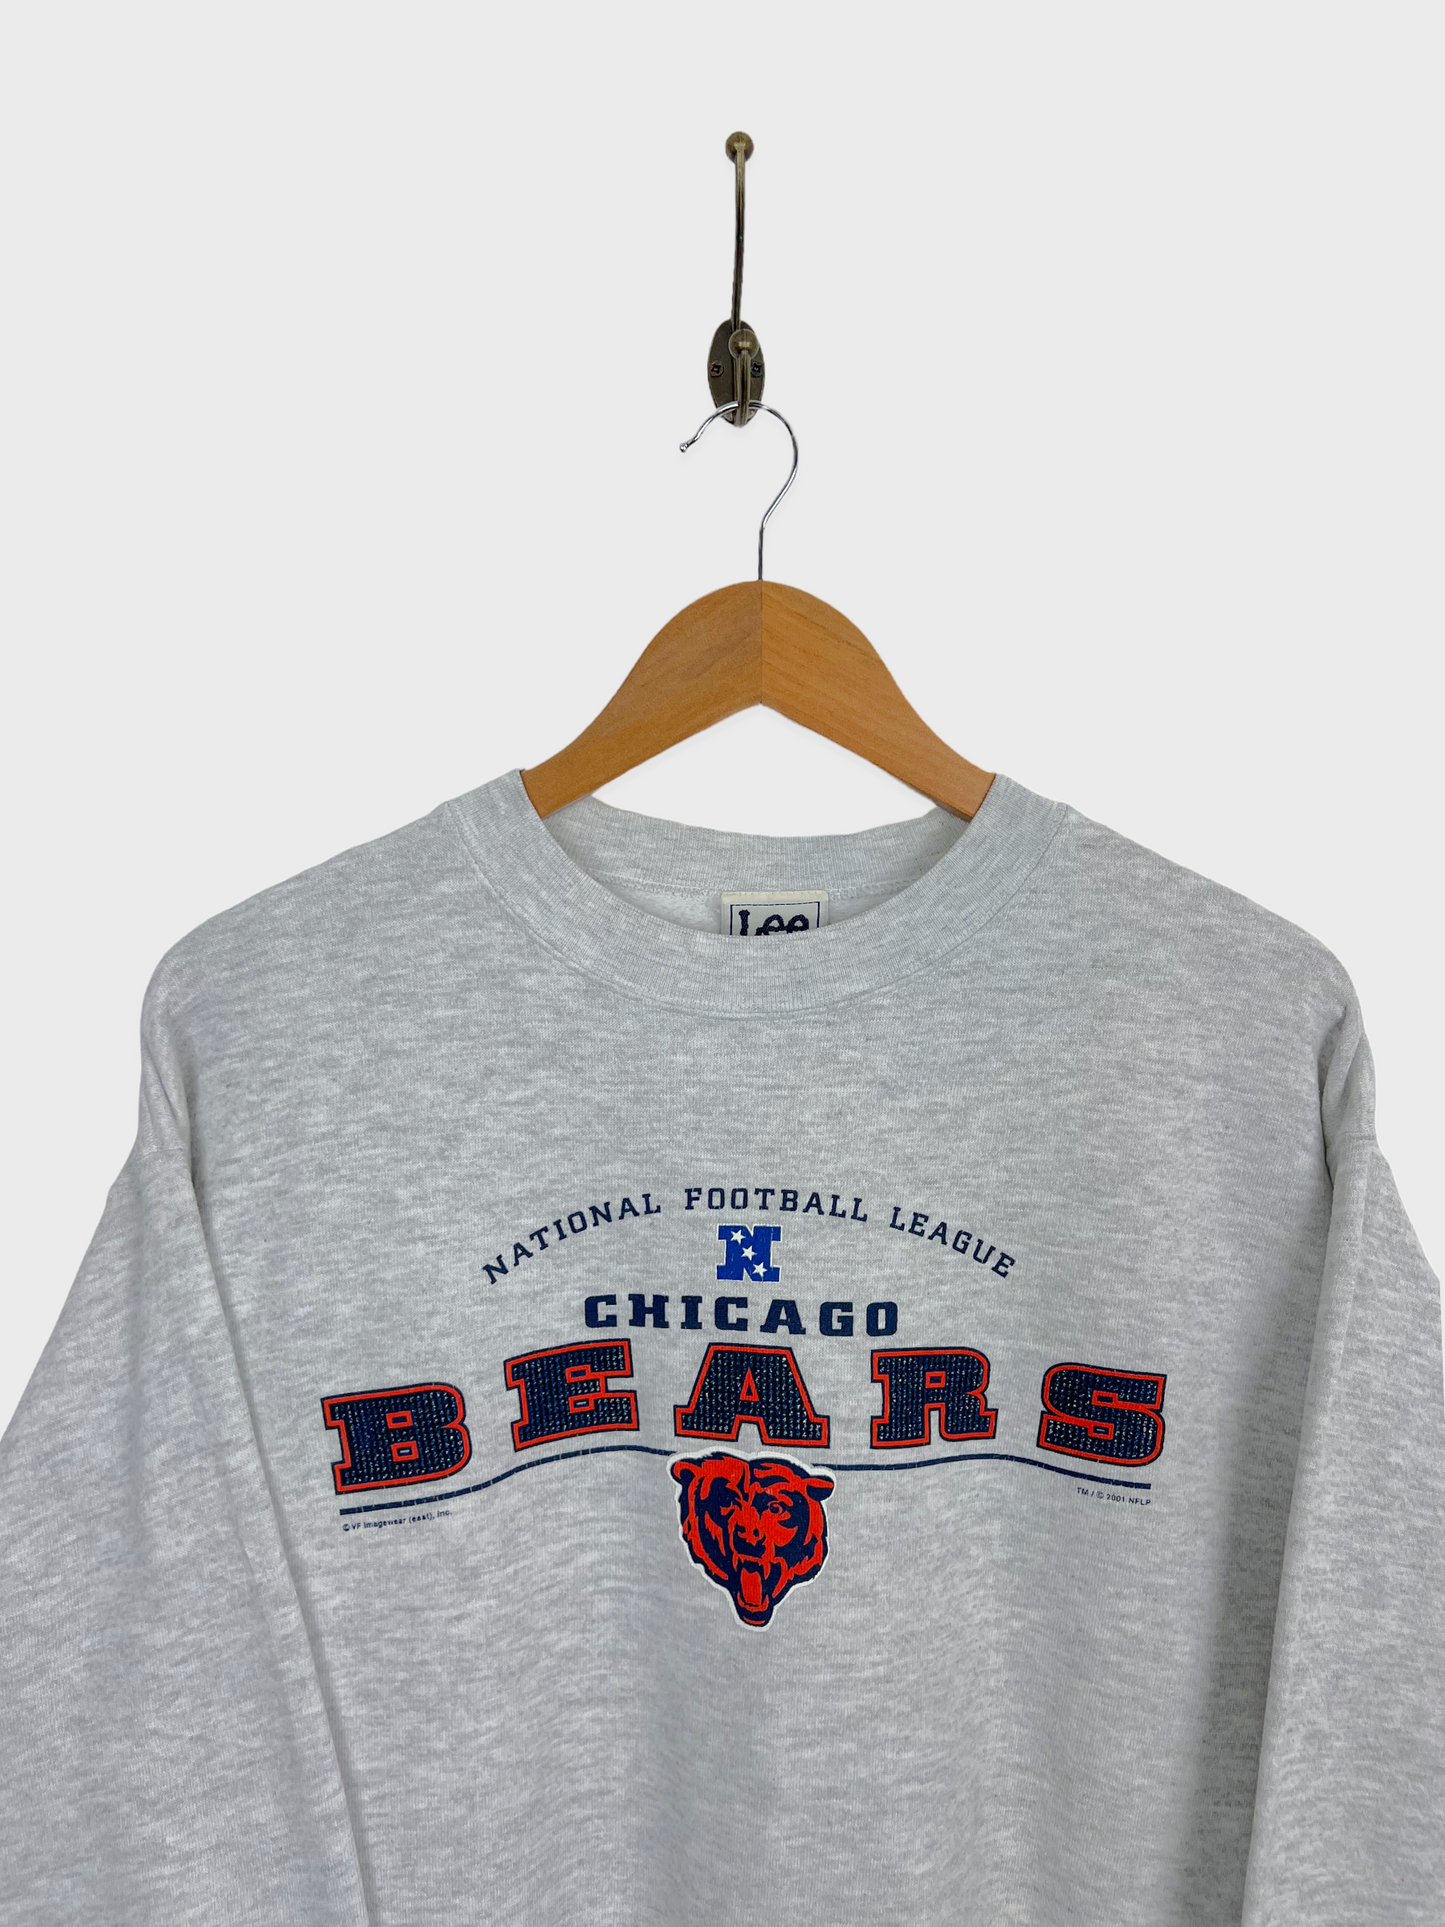 Chicago Bears NFL Vintage Sweatshirt Size 8